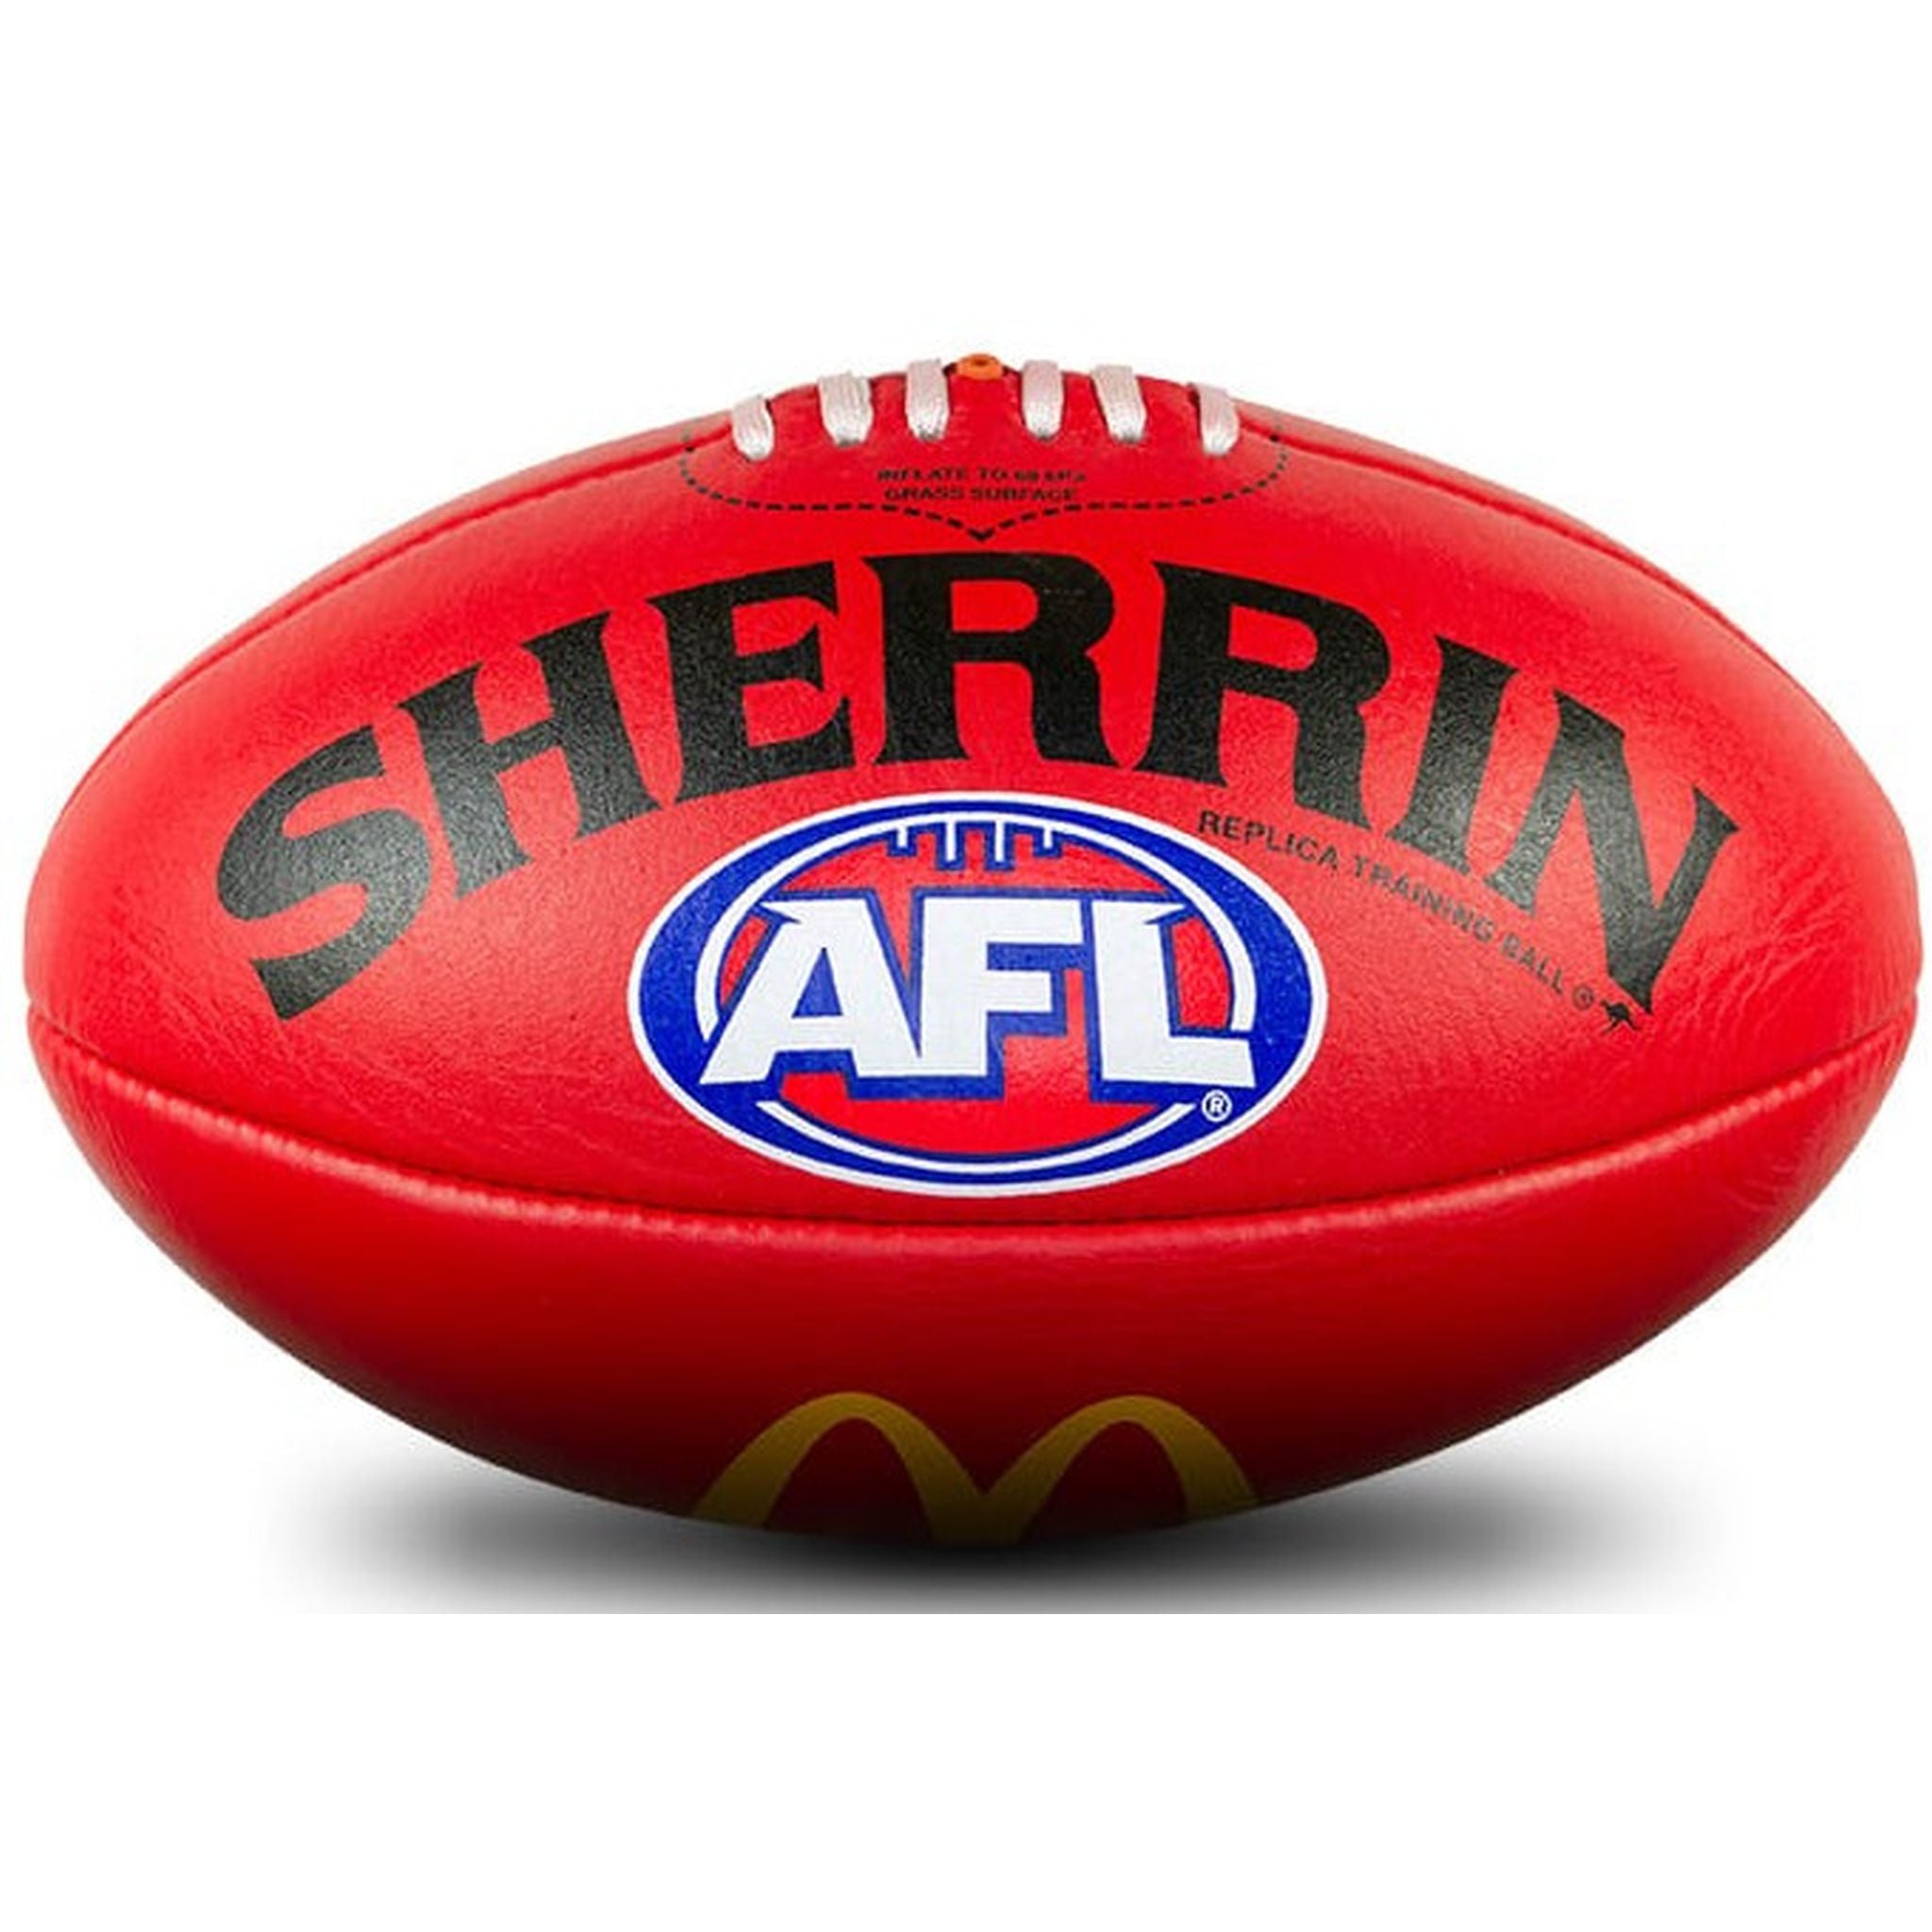 Sherrin AFL MC Leather Replica Training Ball